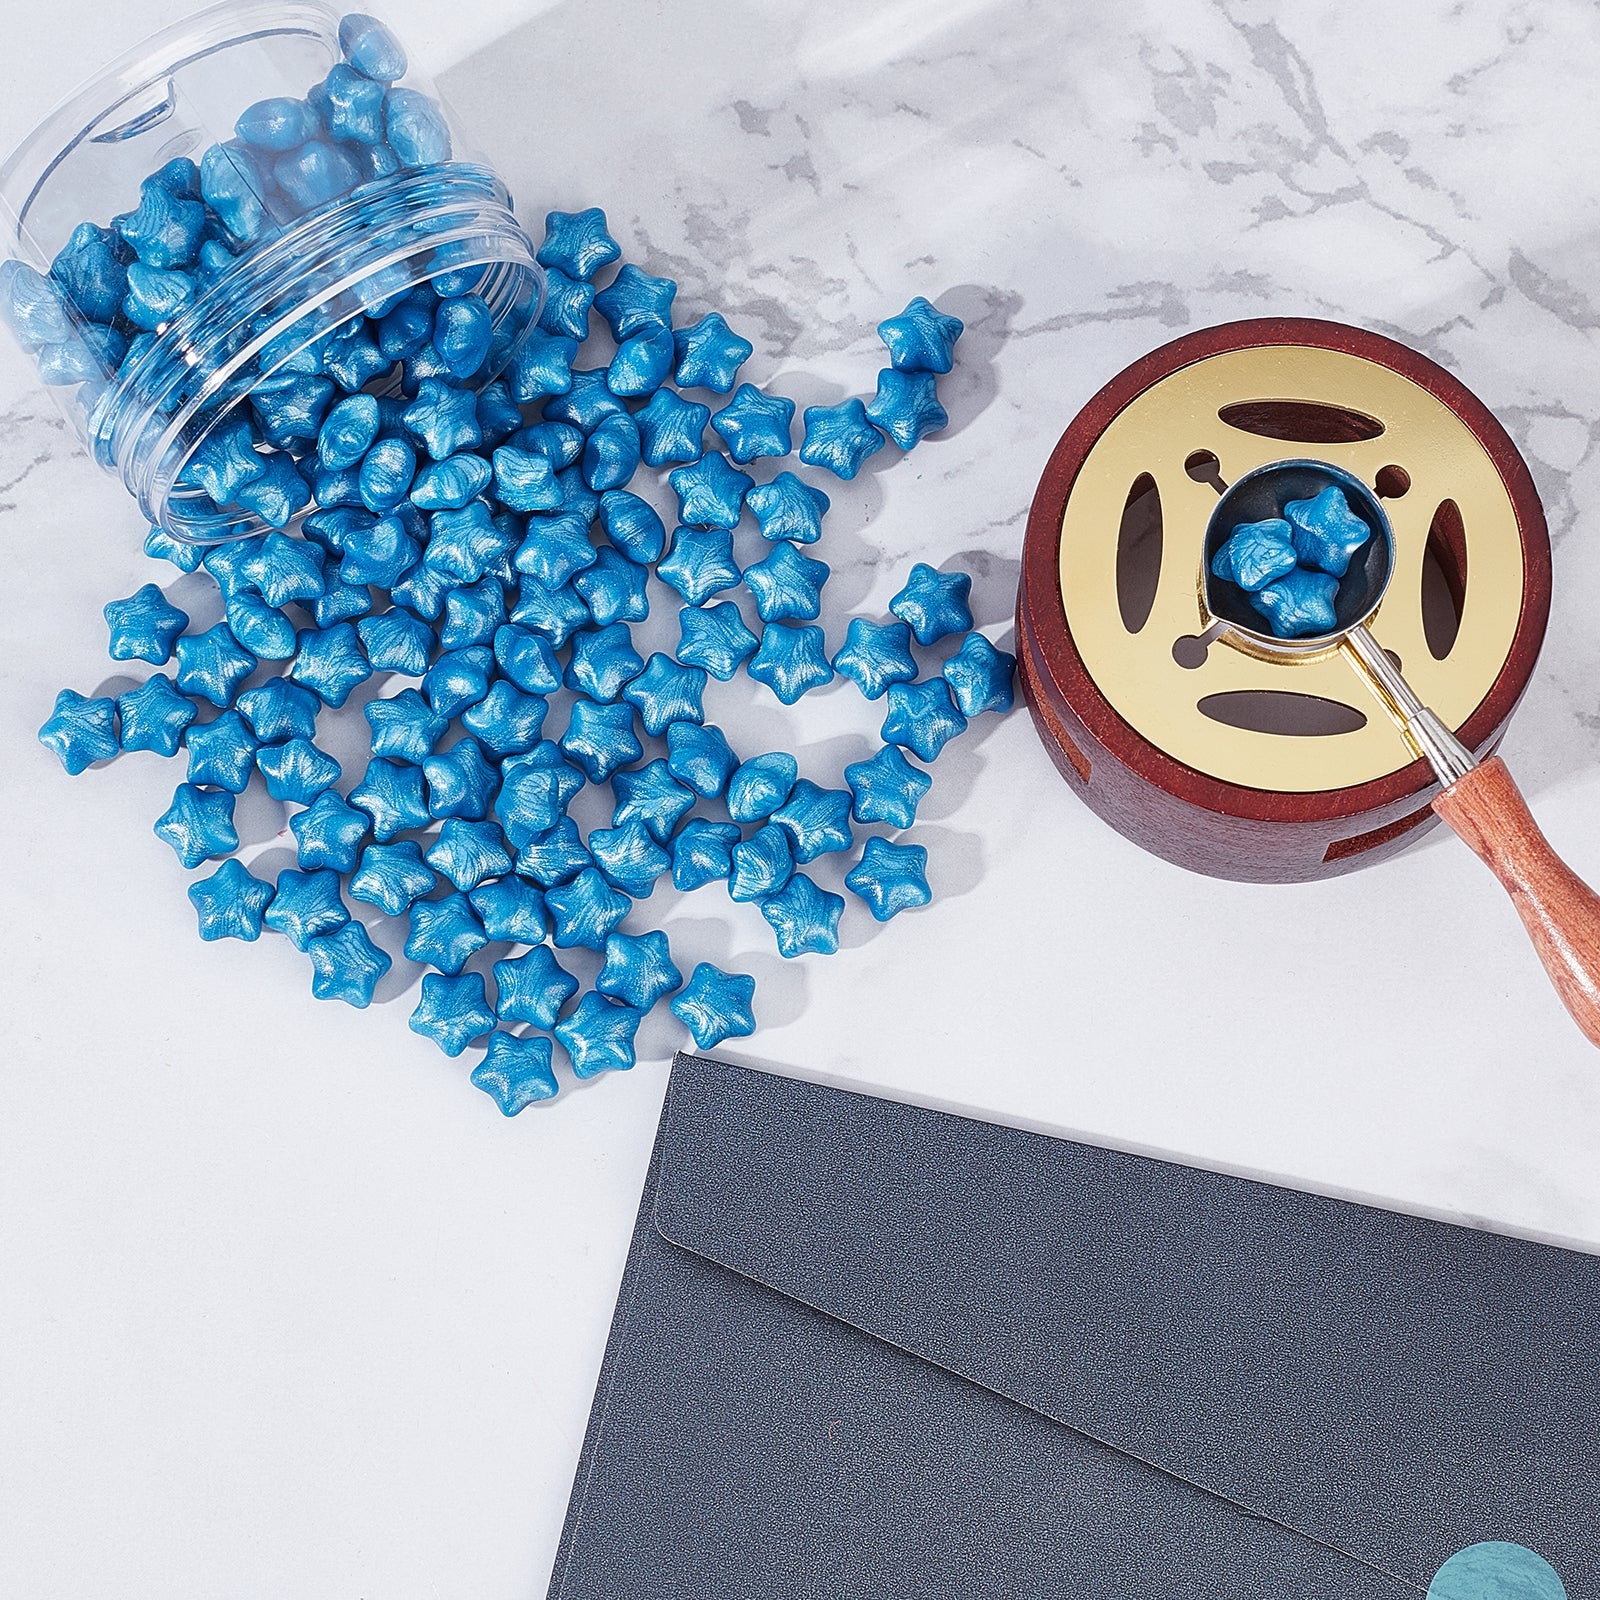 200PCS Wax Sealing Beads(Cornflower Blue)